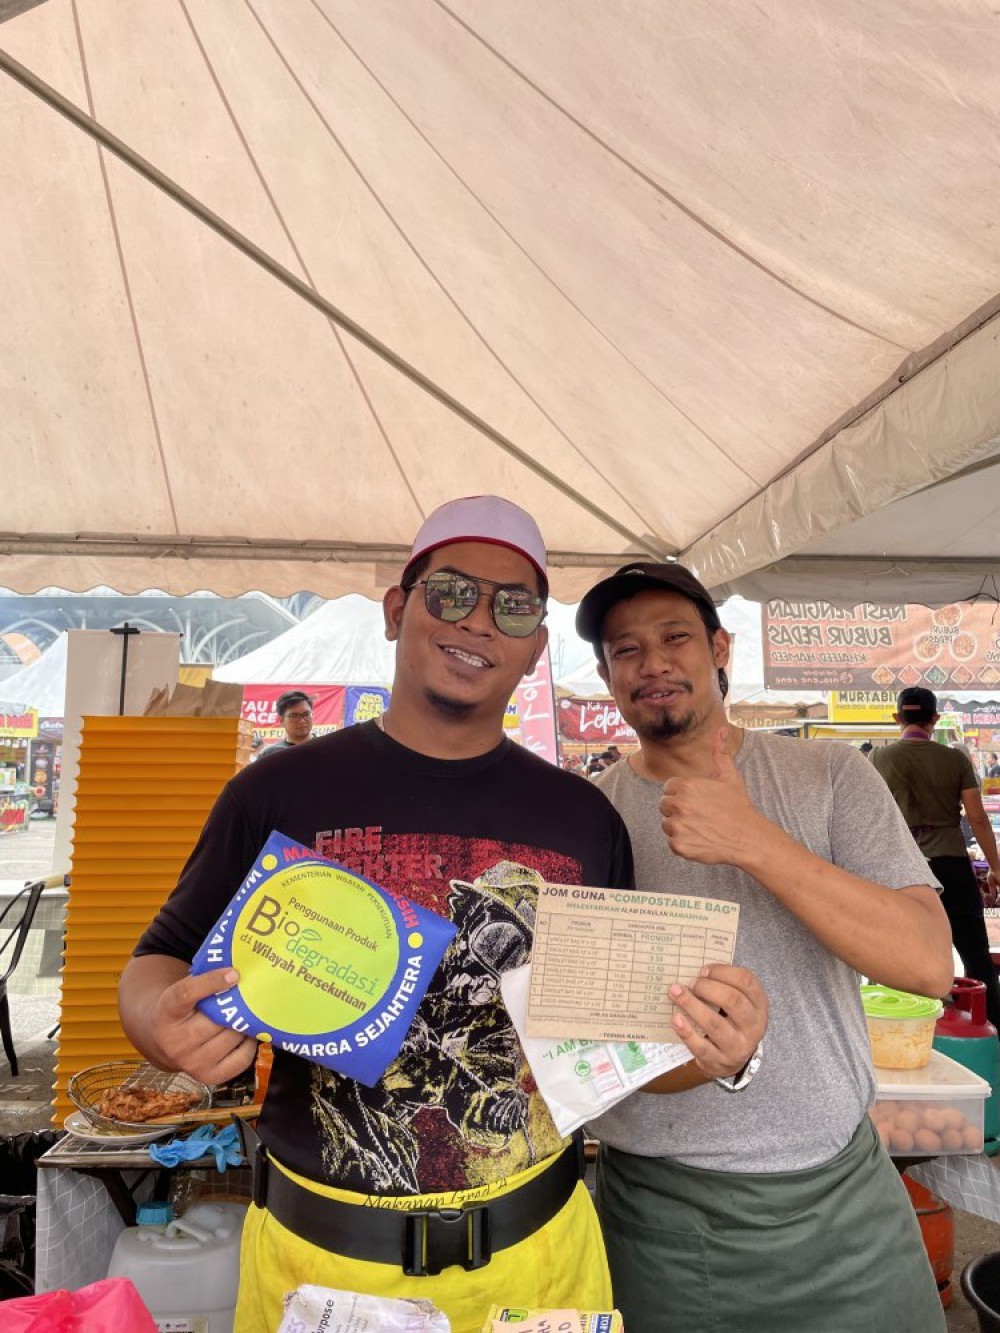 Kempen Produk Biodegradasi & Bawa Beg Sendiri Ke Bazar Ramadhan